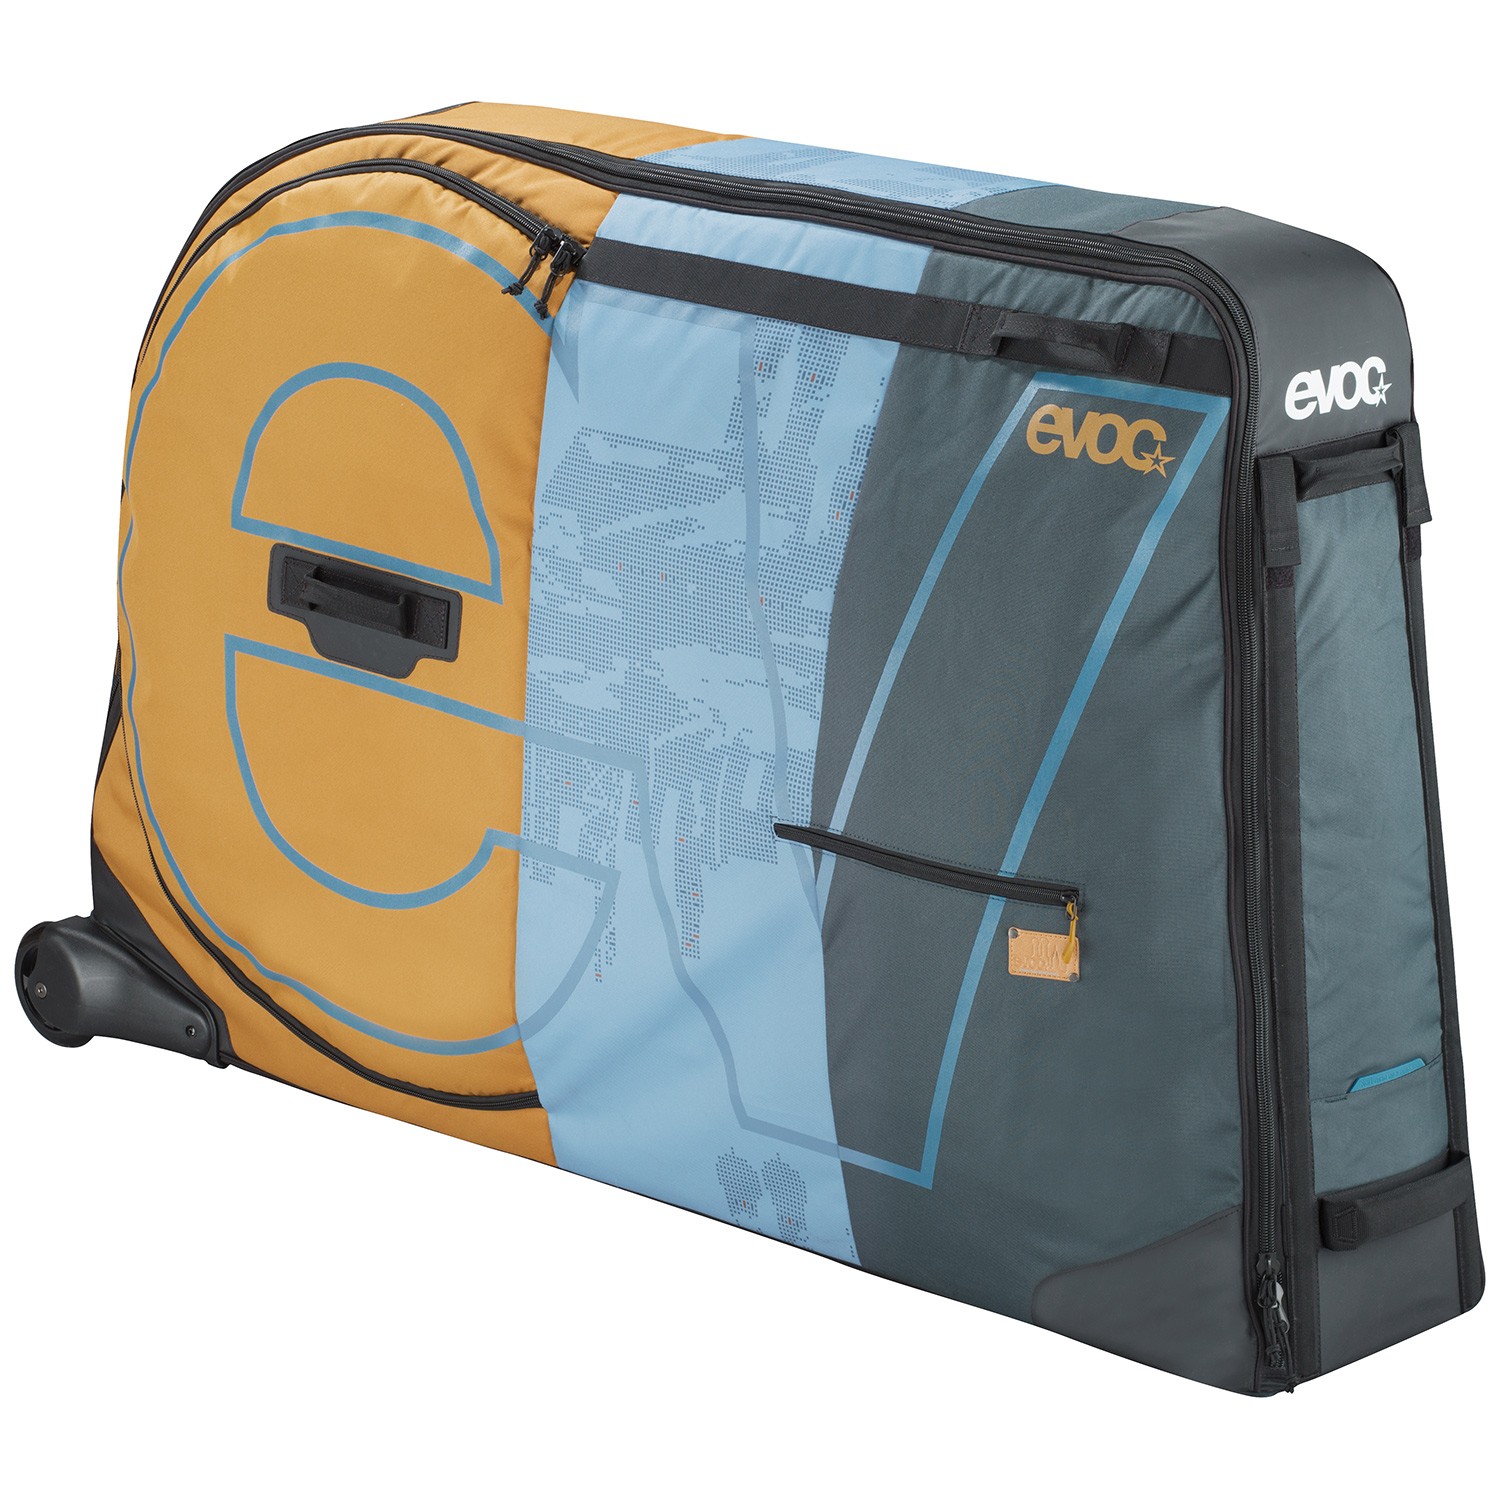 Inloggegevens Plons genie Evoc bike travel bag transporttas 280l multicolour